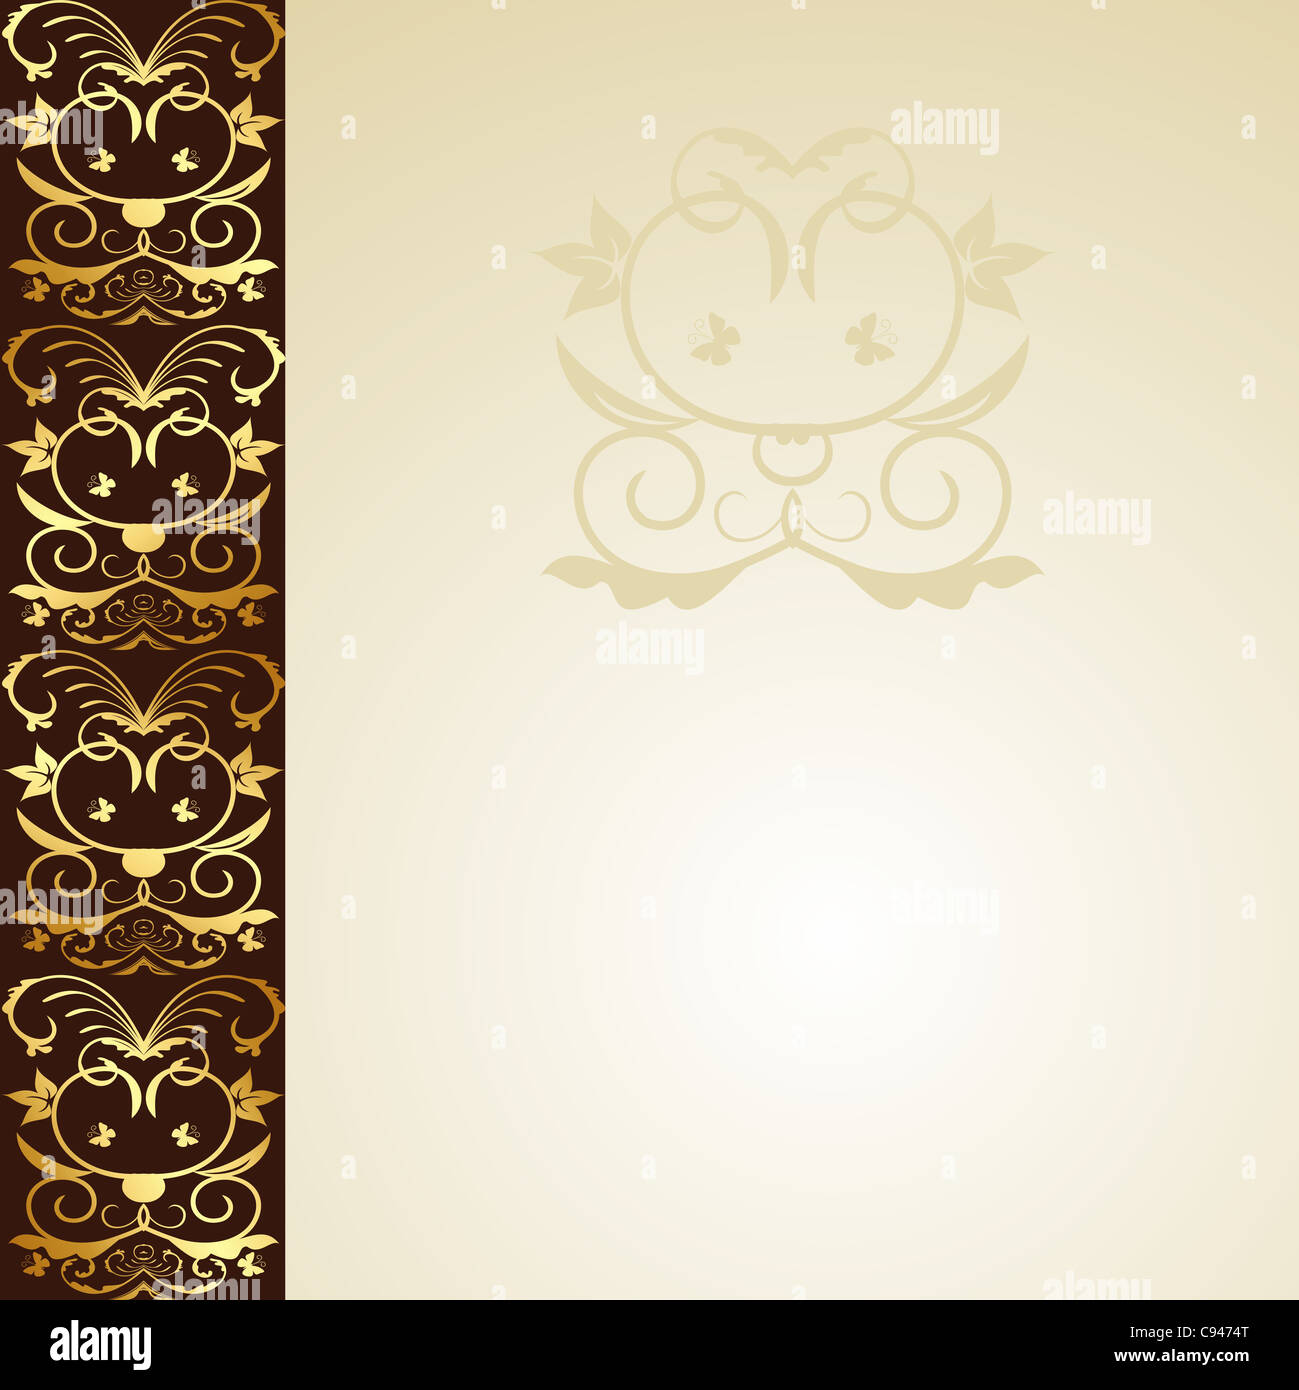 Illustration floral background for design wedding card - vector Stock Photo  - Alamy